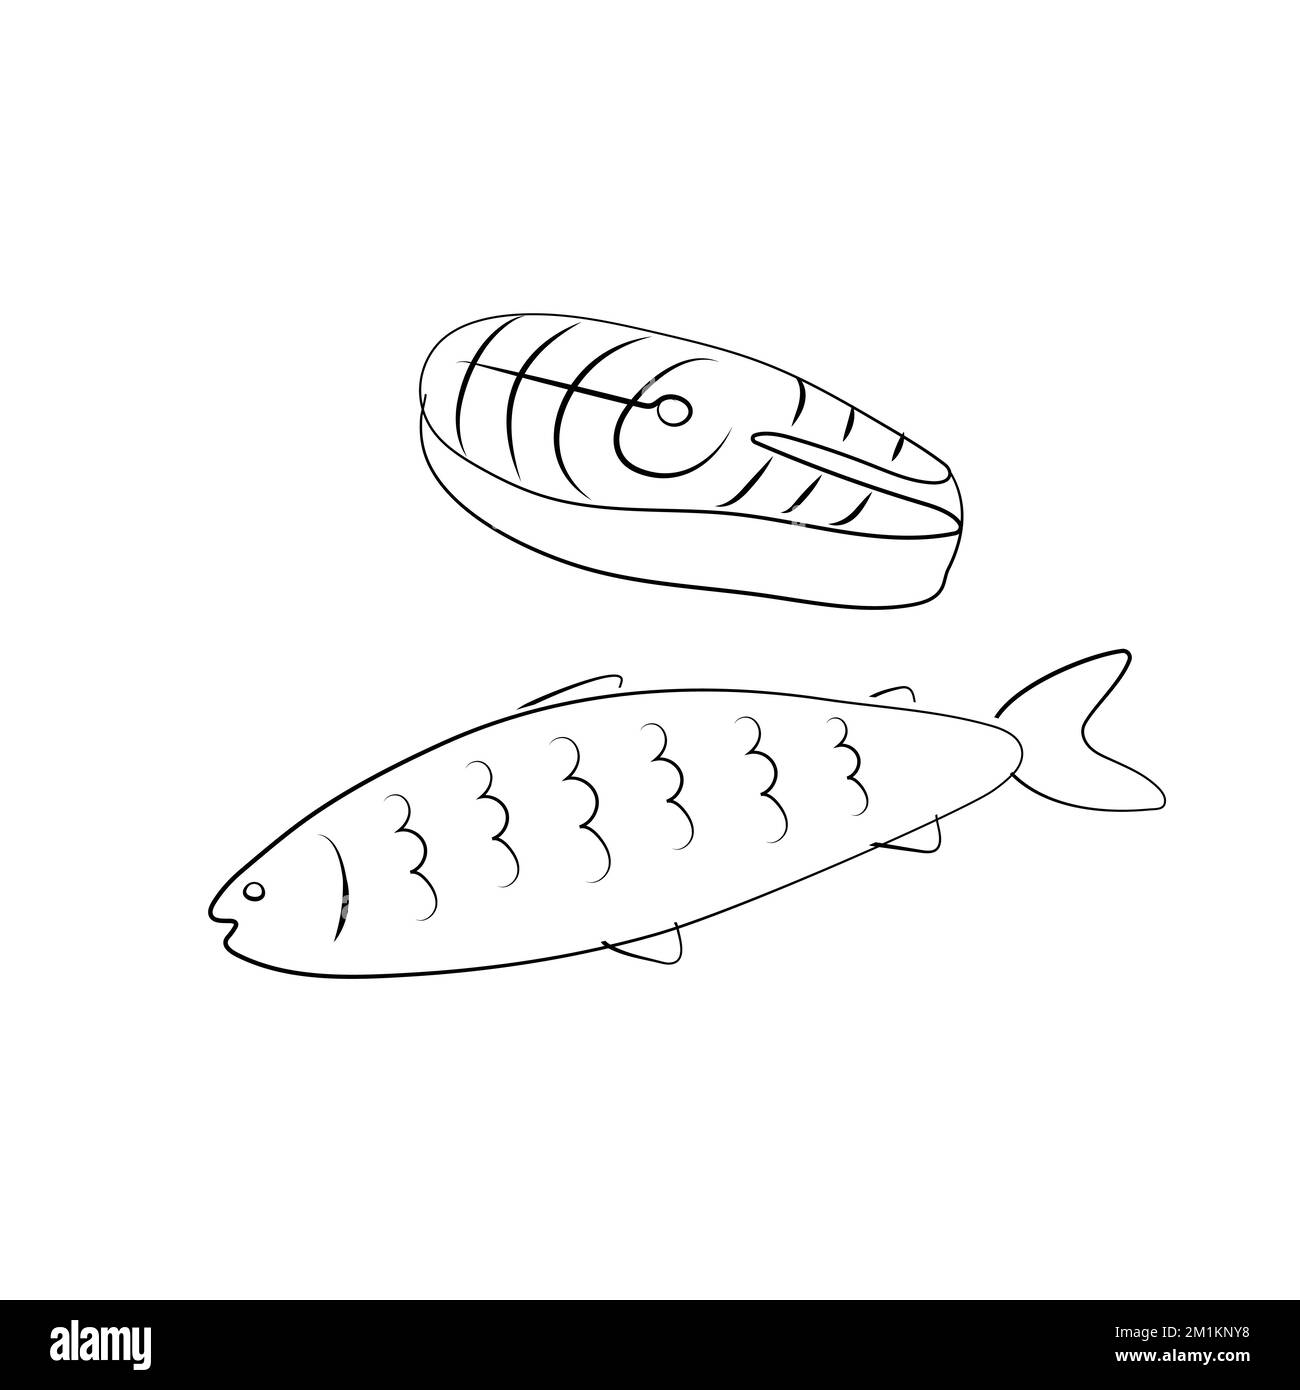 Salmon steak icon. Fish sign. Vector cartoon hand drawn illustration Stock Vector